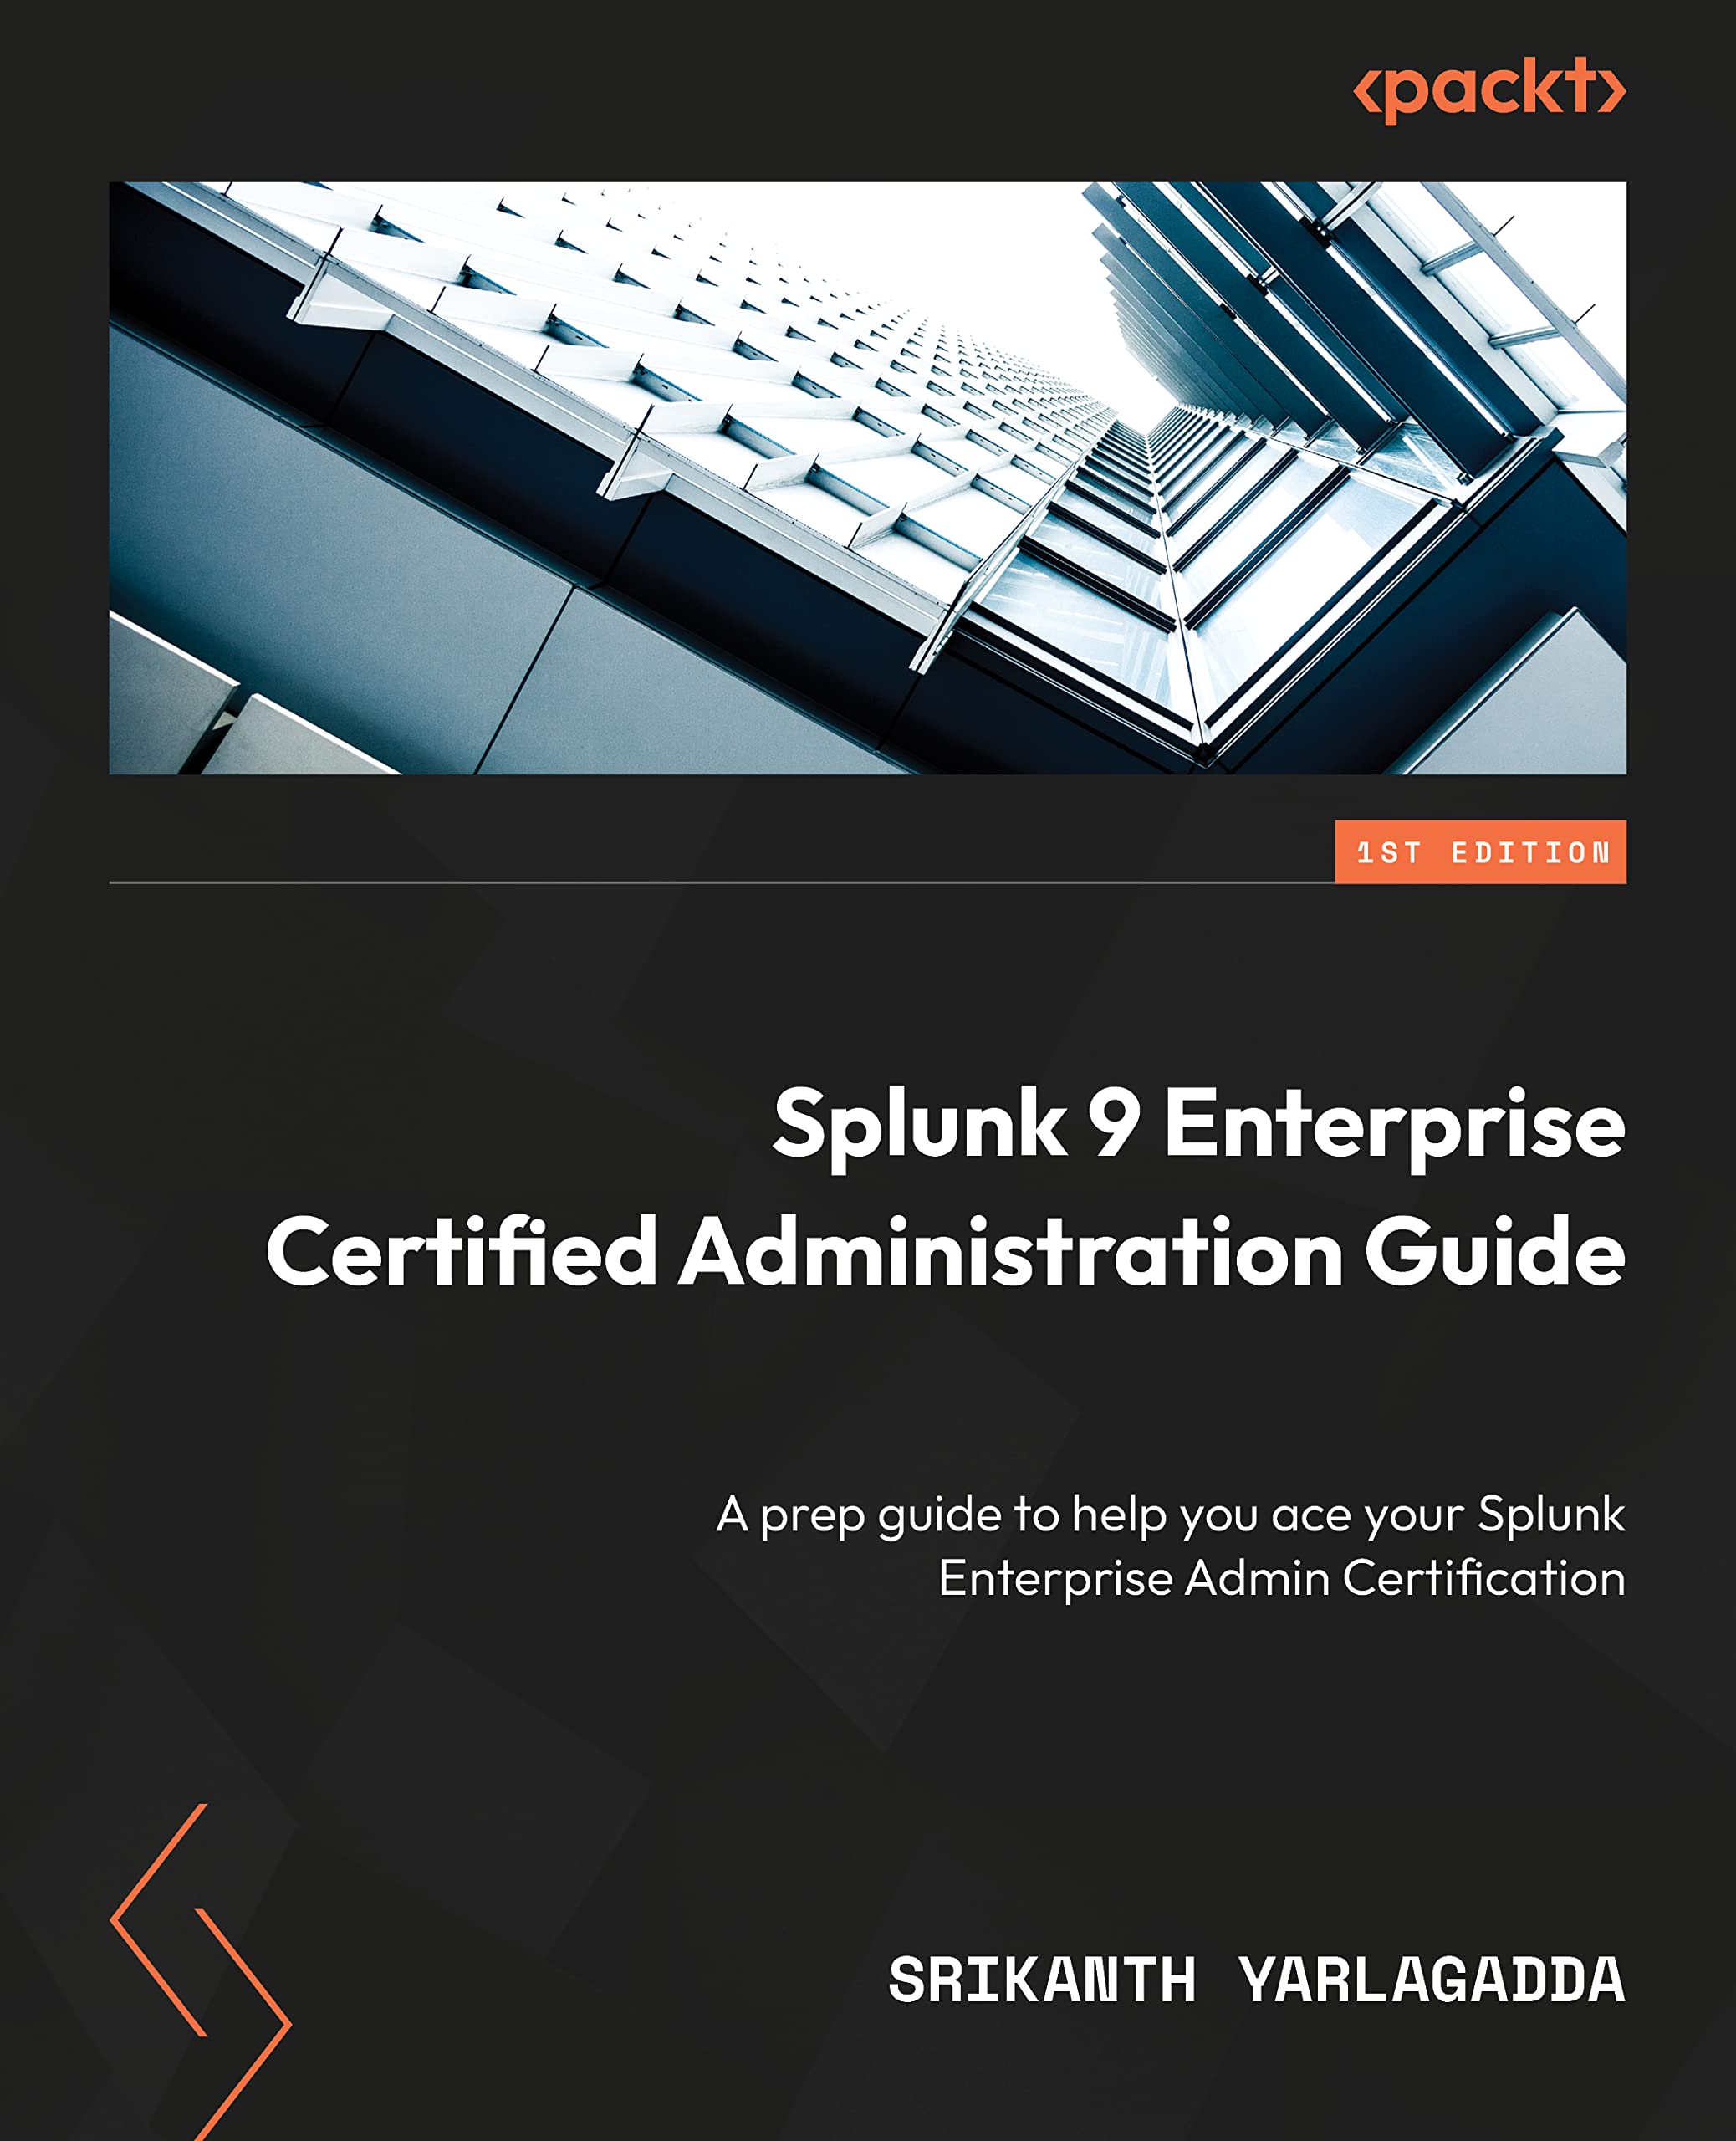 Splunk 9 Enterprise Certified Administration Guide: A prep guide to help you ace your Splunk Enterprise Admin Certification